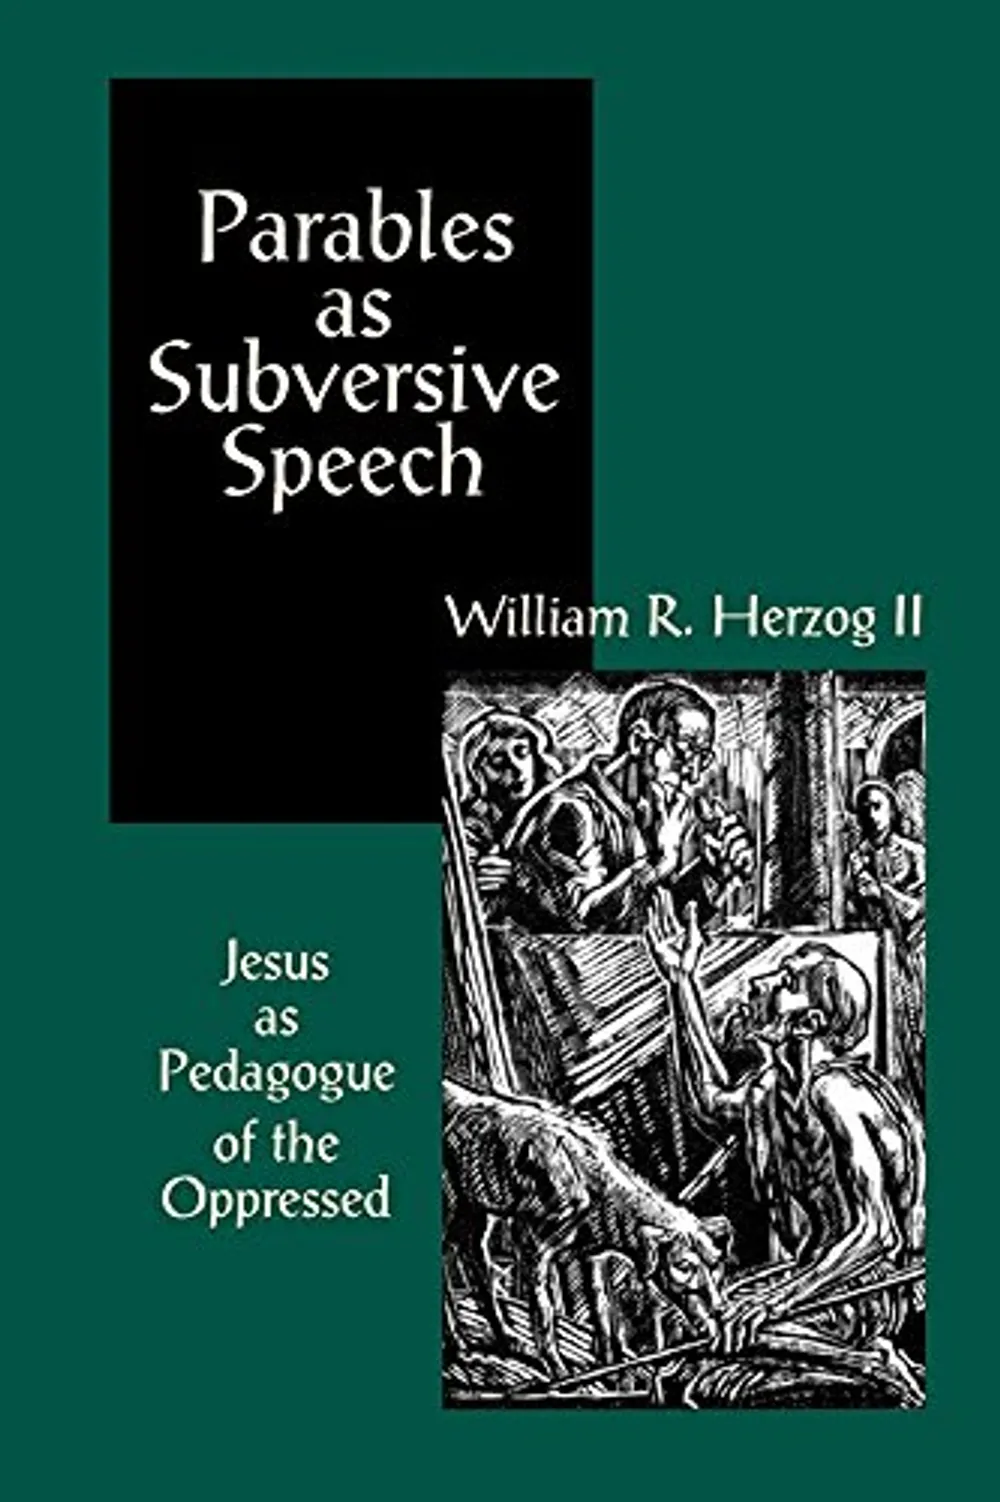 Parables as Subversive Speech, by William R. Herzog II